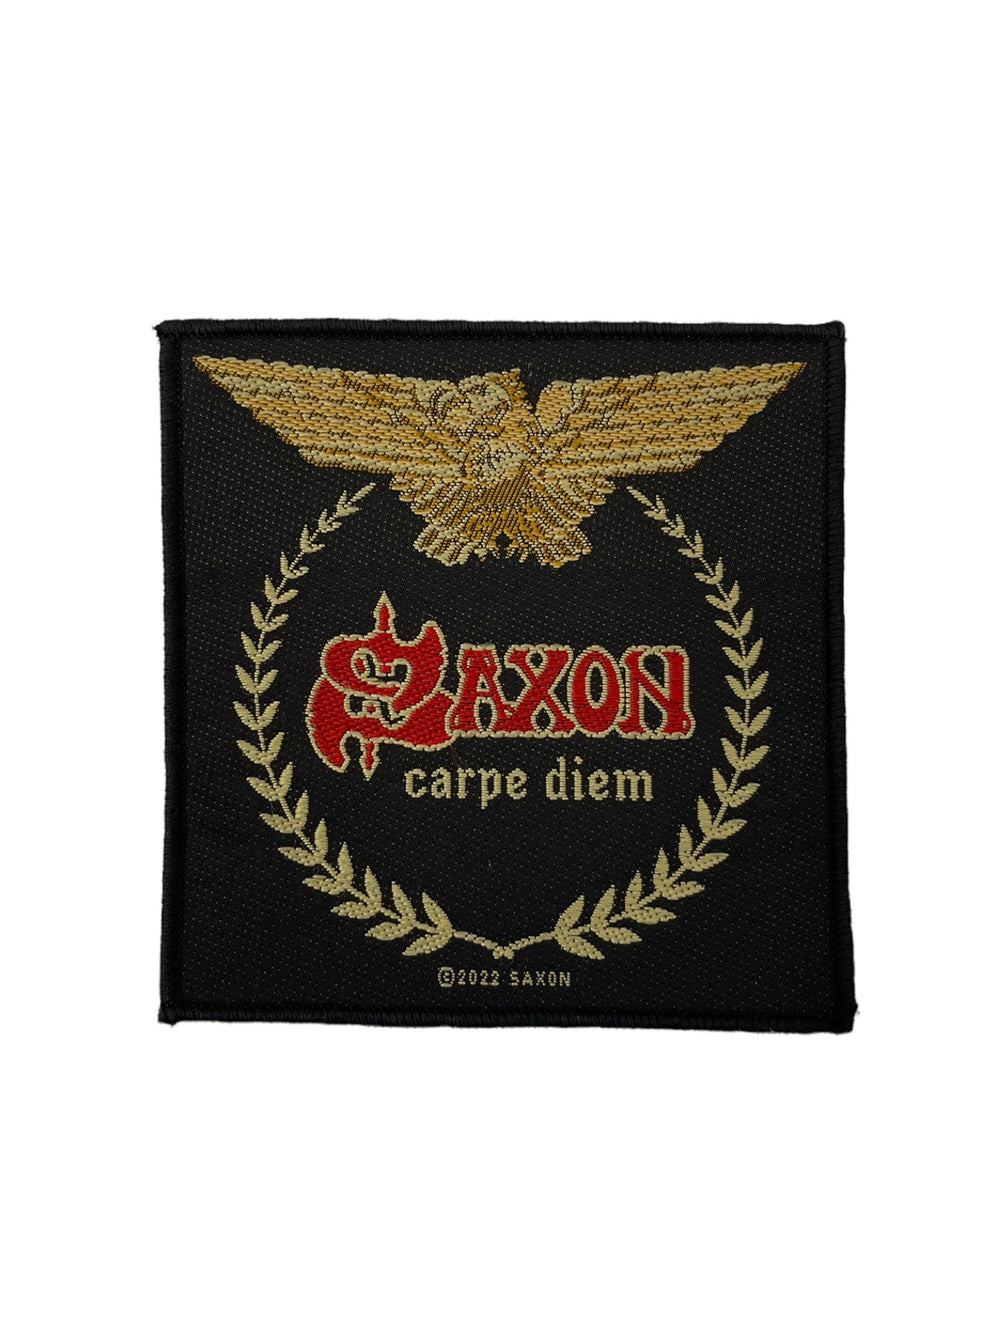 Saxon Carpe Diem Official Woven Patch Brand New